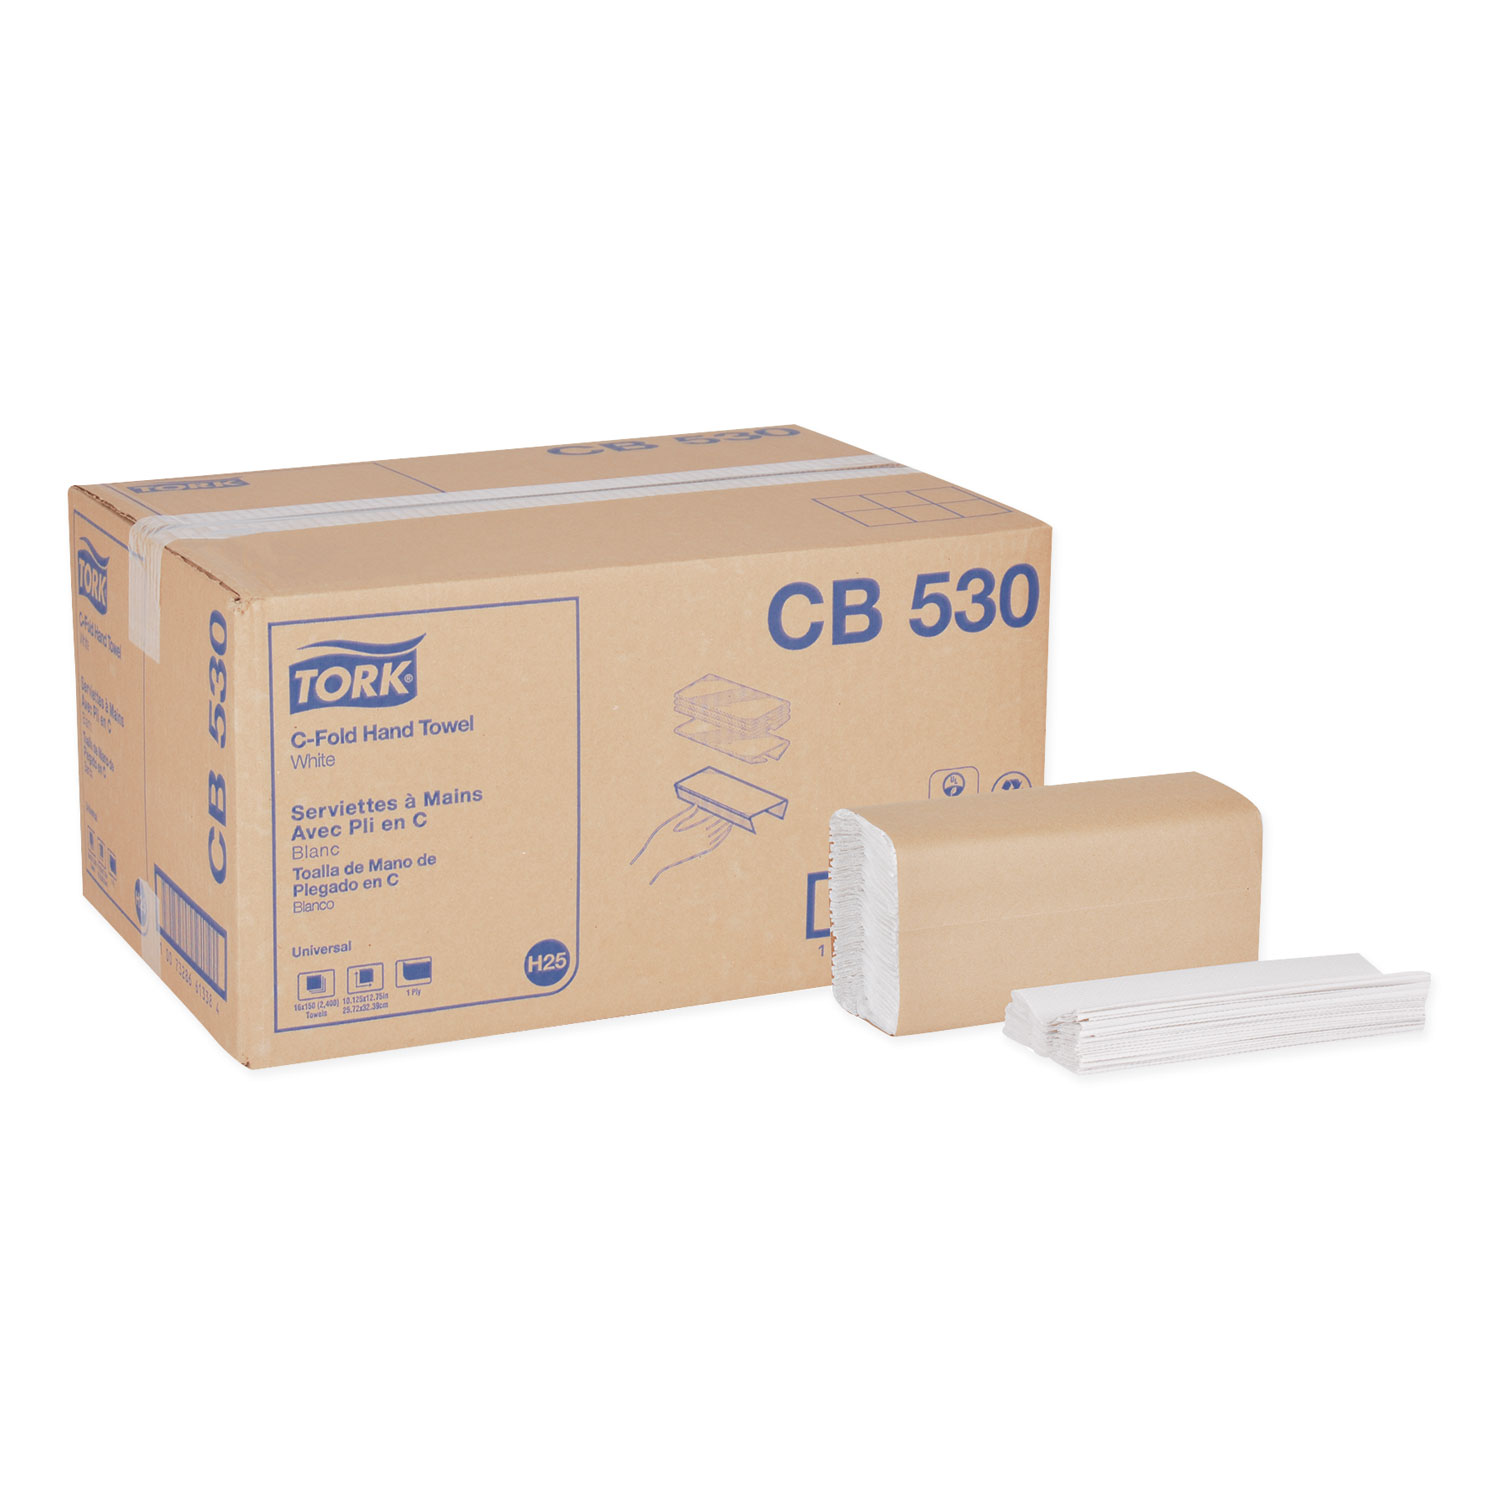  Tork CB530 Universal C-Fold Hand Towel, 1-Ply, 10.13 x 12.75, White, 150/Pack, 16 Packs/Carton (TRKCB530) 